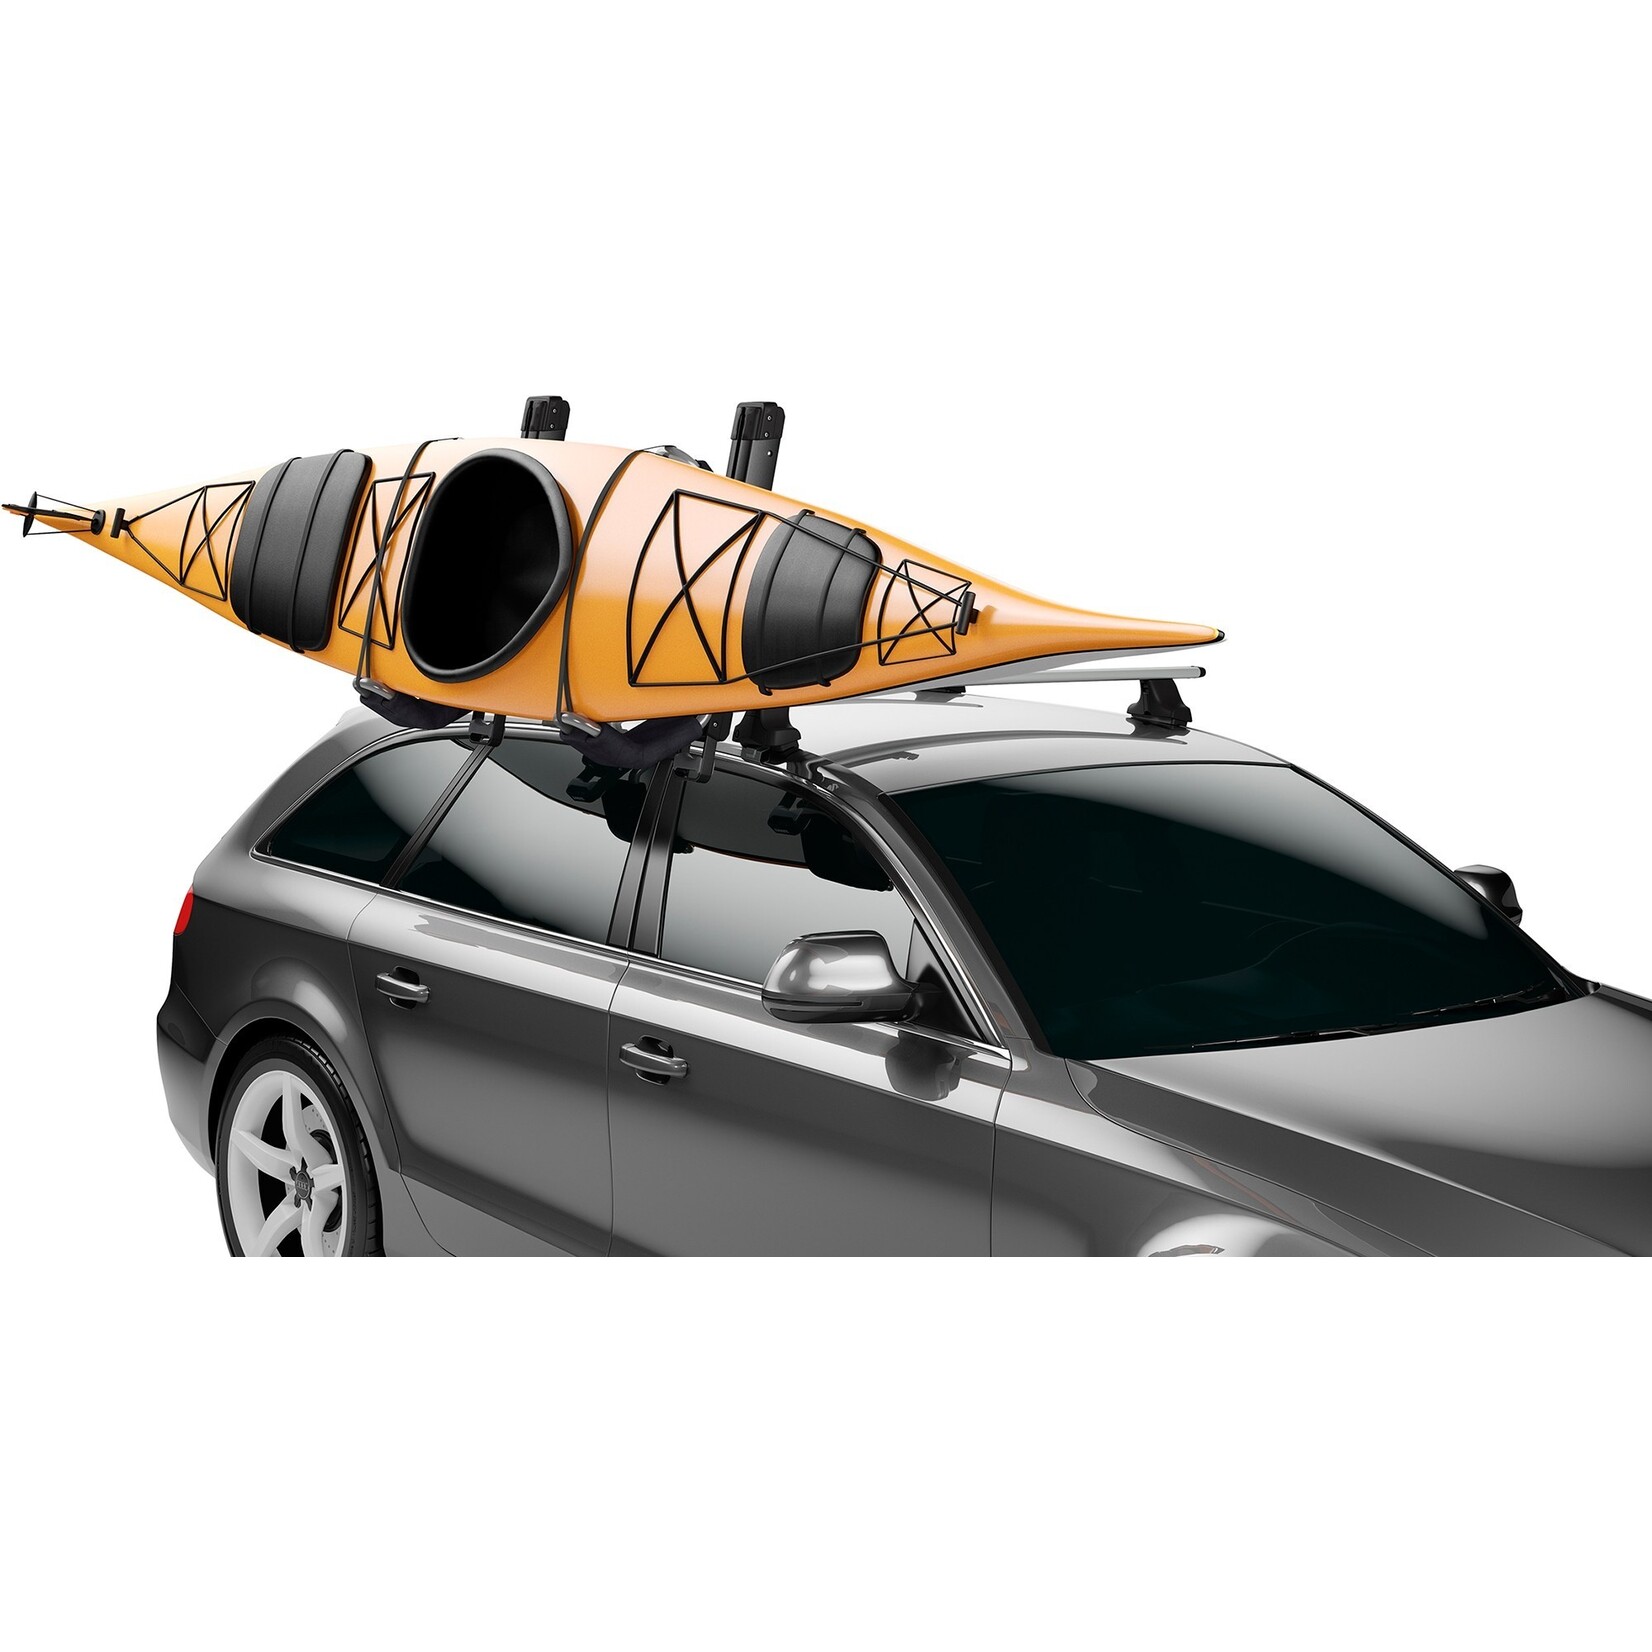 Thule Hullavator Pro Kayak Carrier